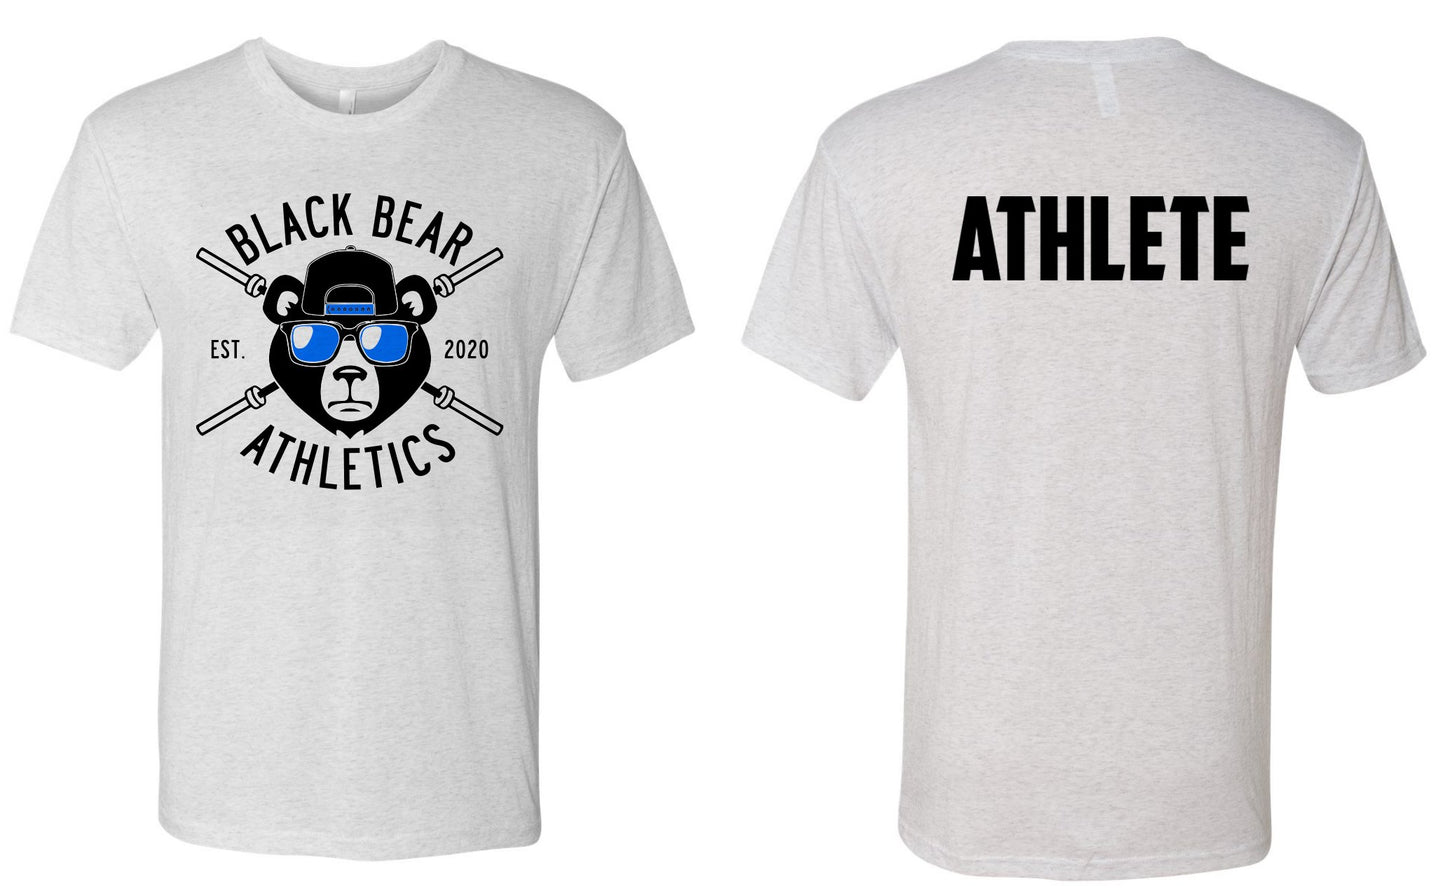 Men's Tee Black Bear Athletics 6010